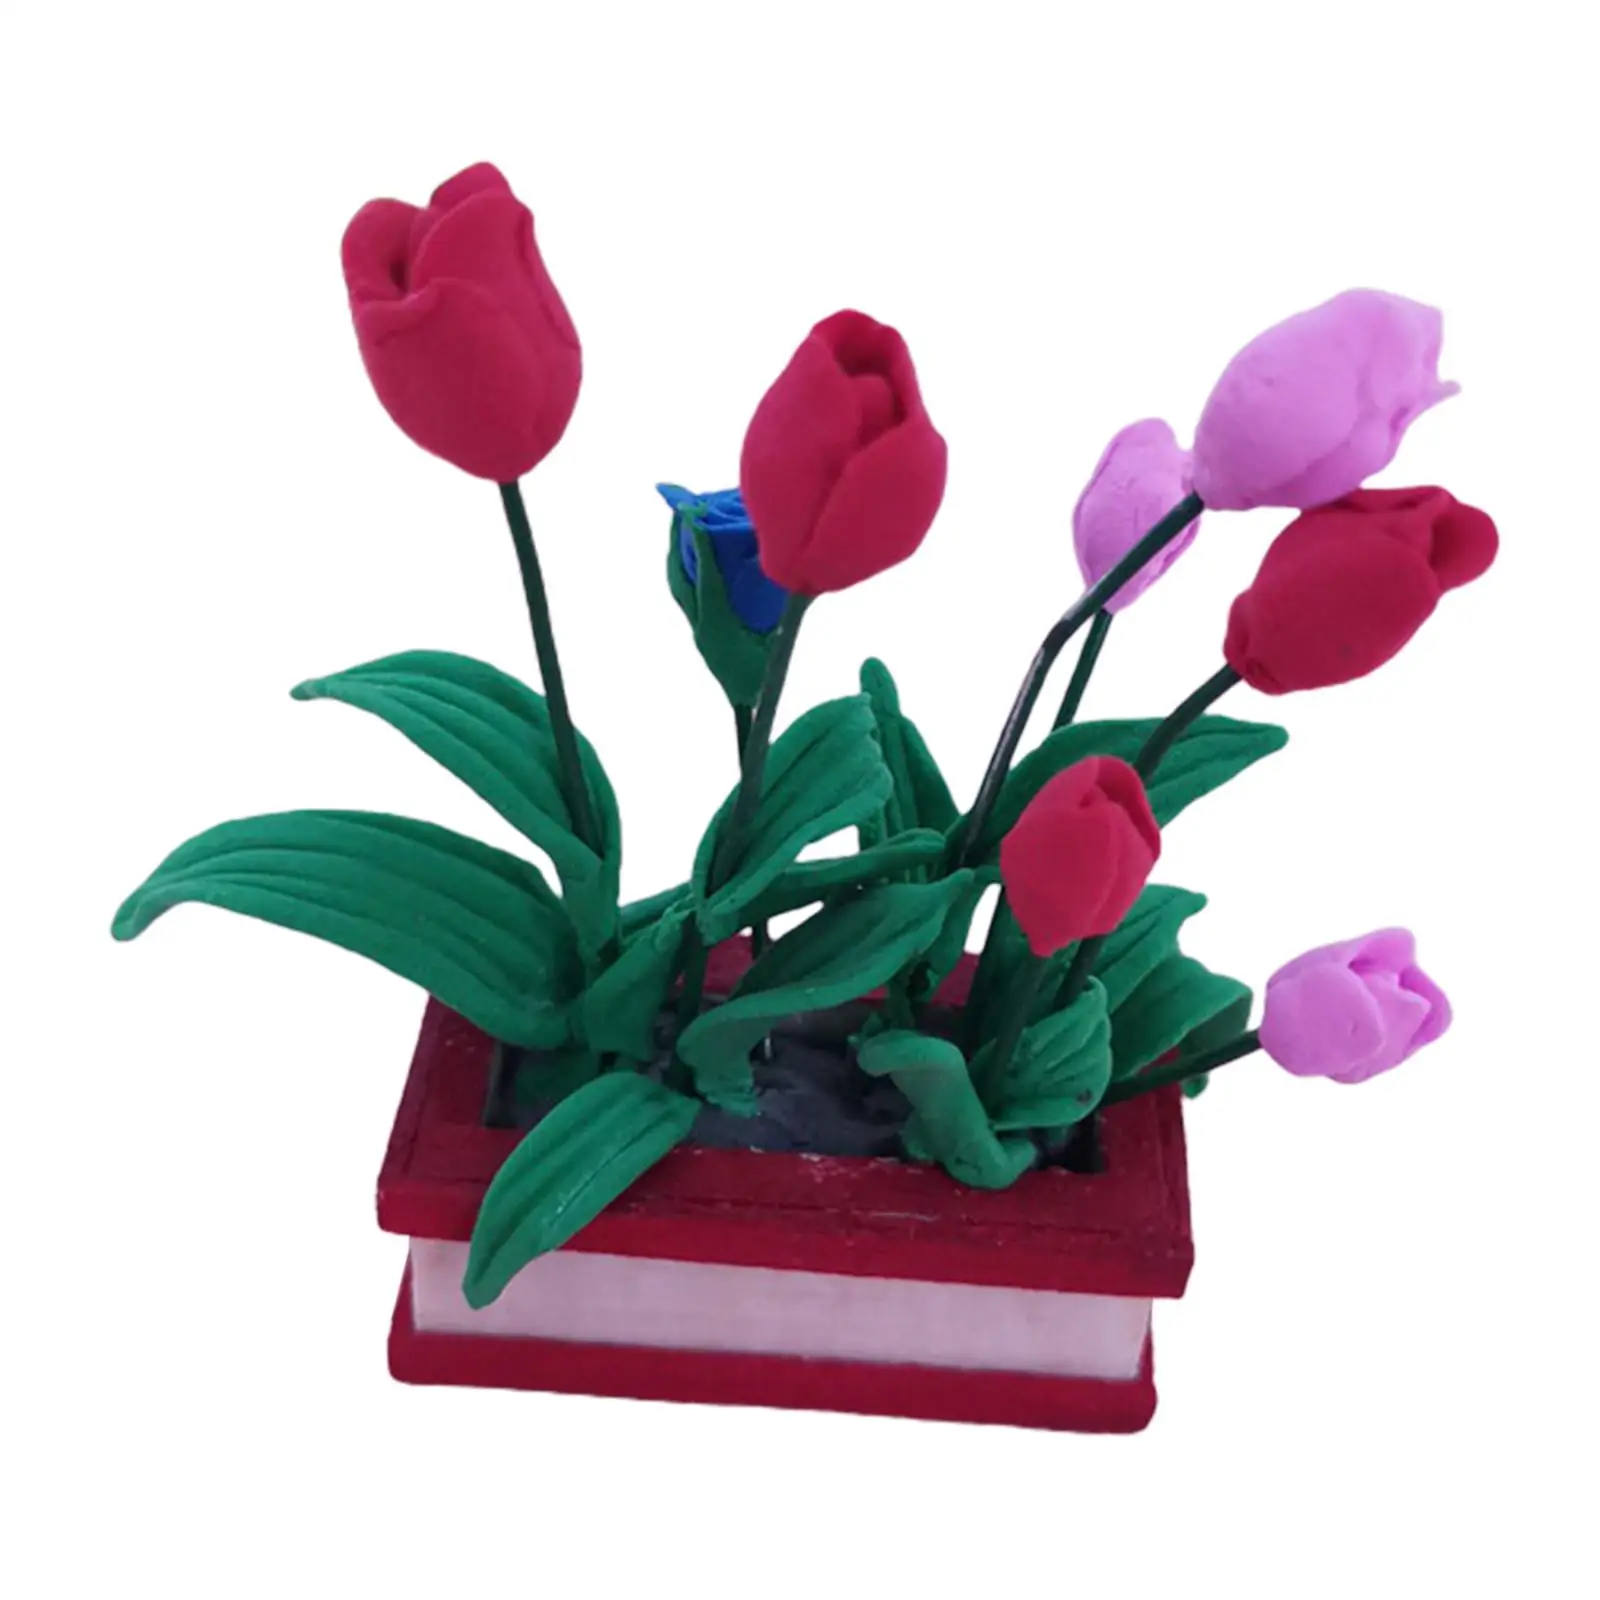 1/12 Dollhouse Tiny Bonsai Model Garden Plant Tulips for Diorama Dollhouse Accessories Fairy Garden Micro Landscape Gift